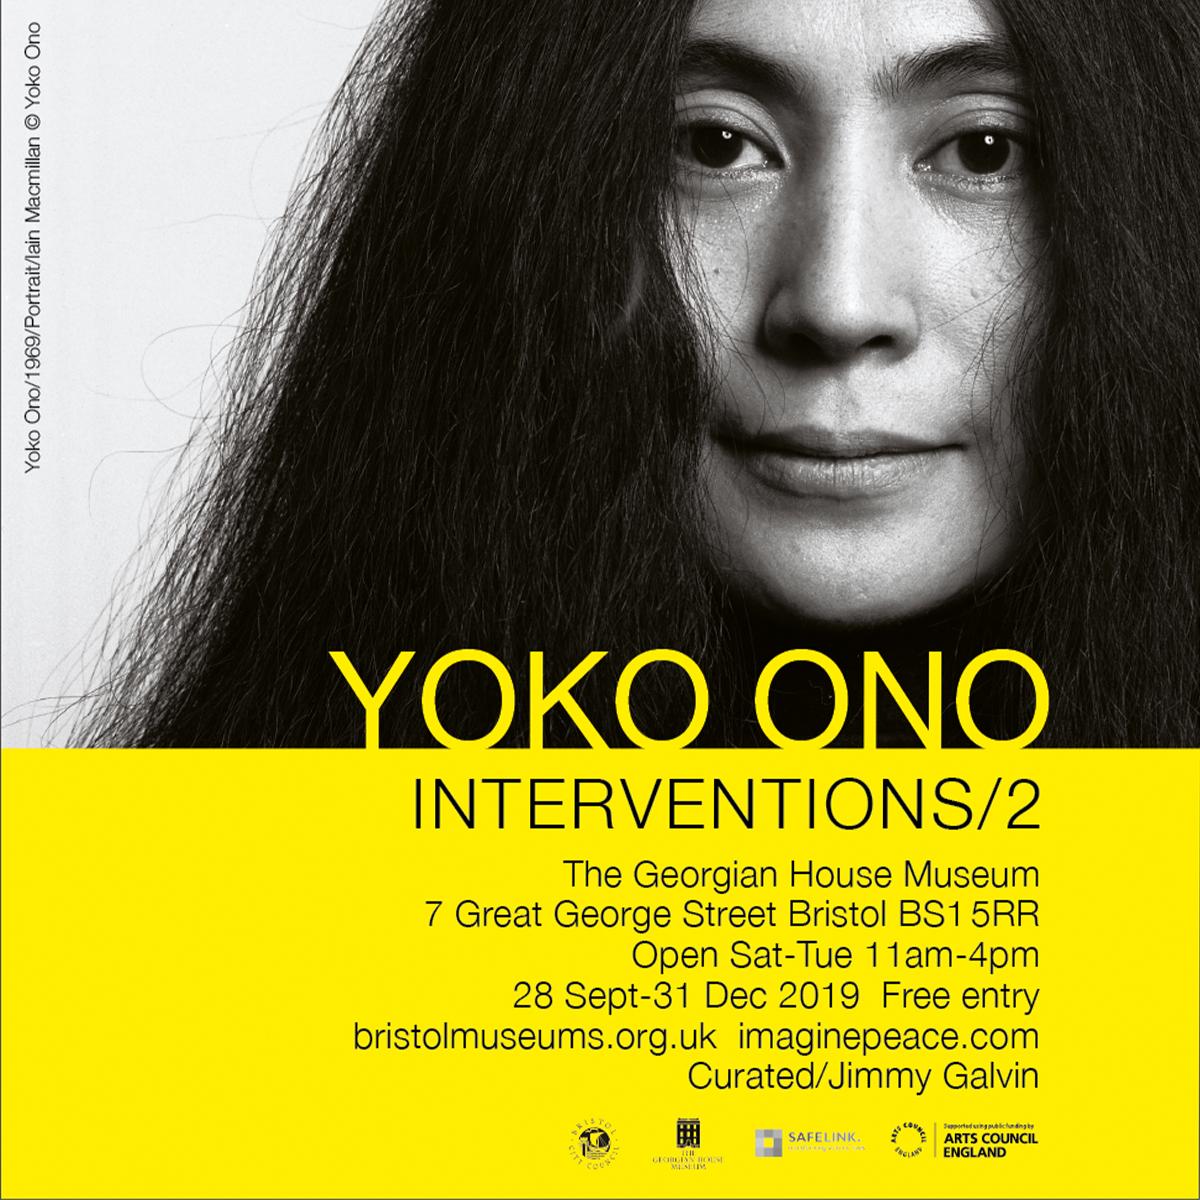 Yoko Ono's Interventions/2 at Bristol's Georgian House Museum.